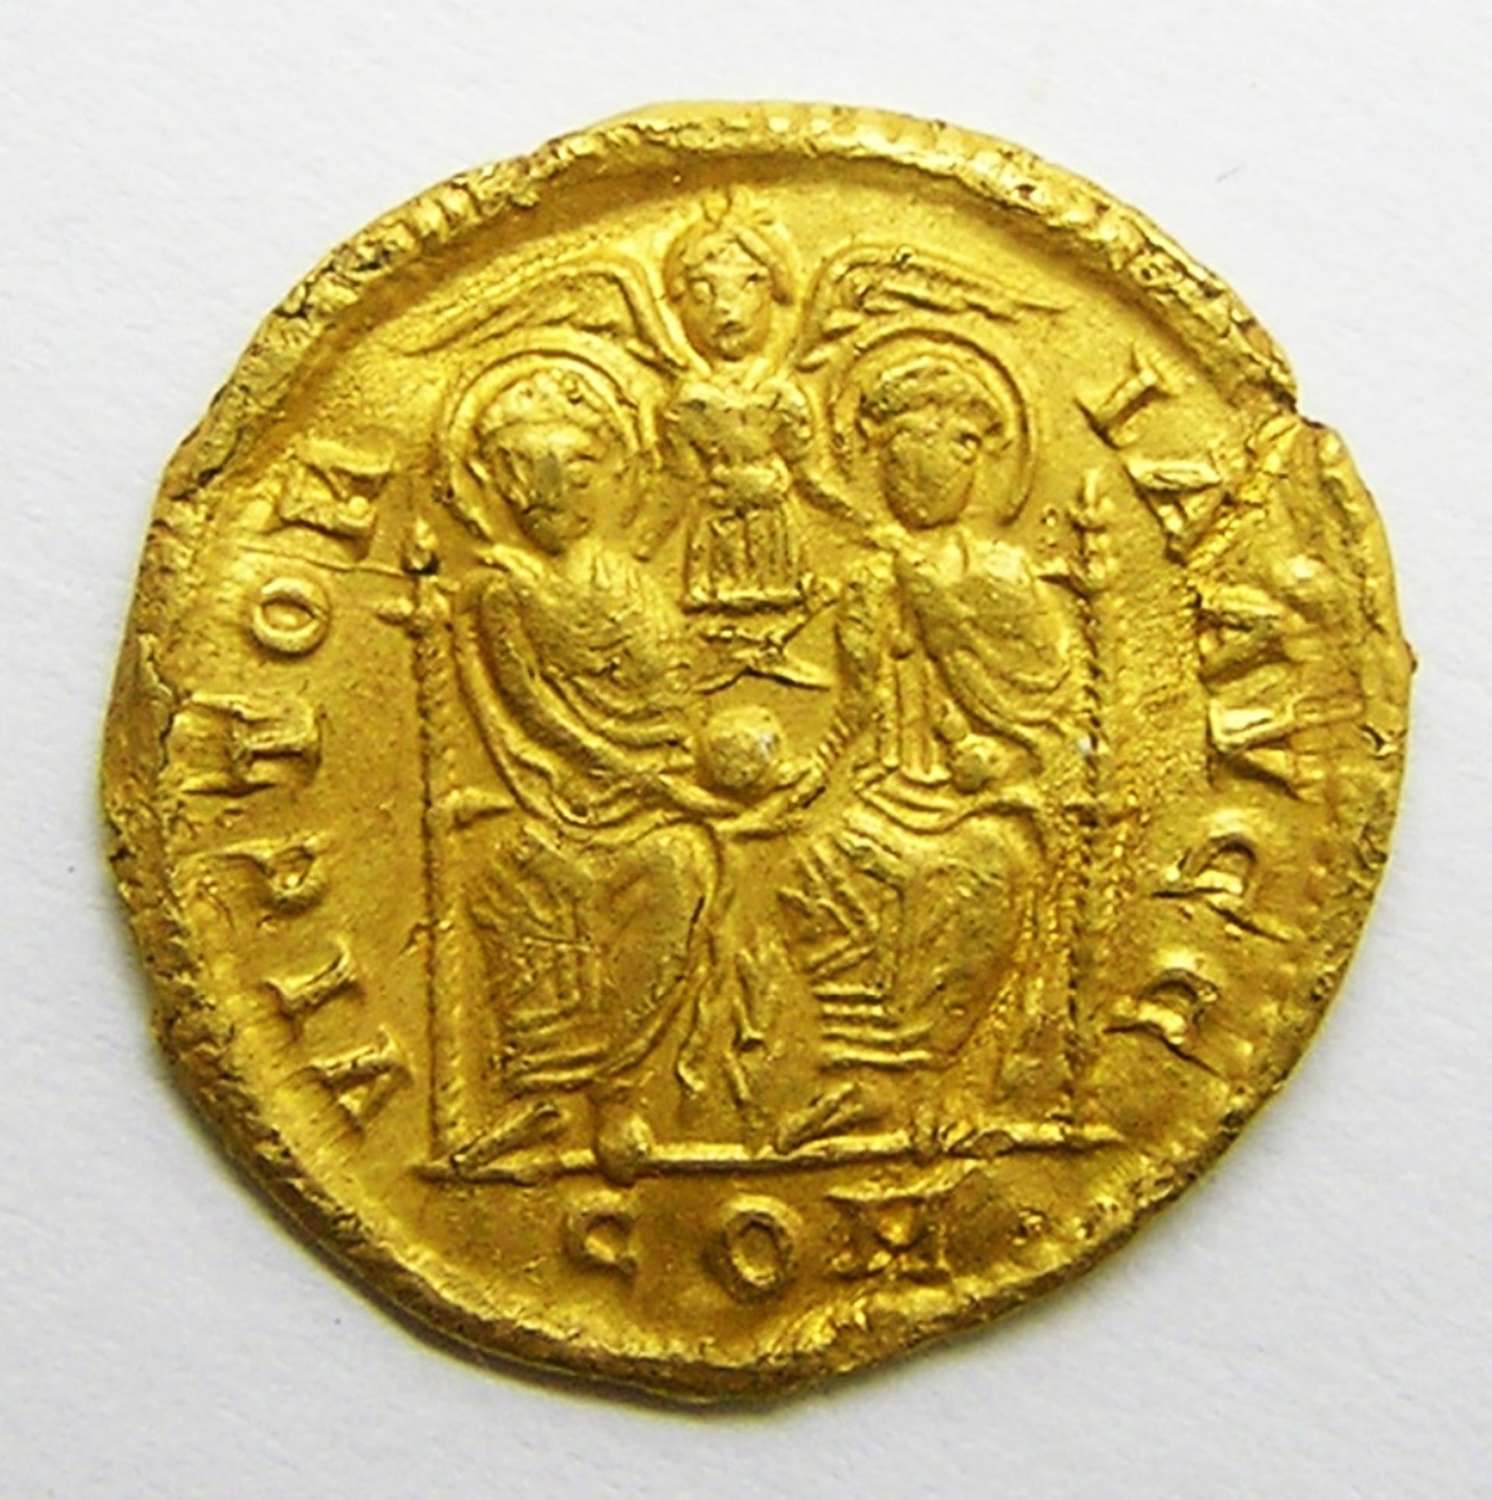 Roman gold solidus of Valentinian II